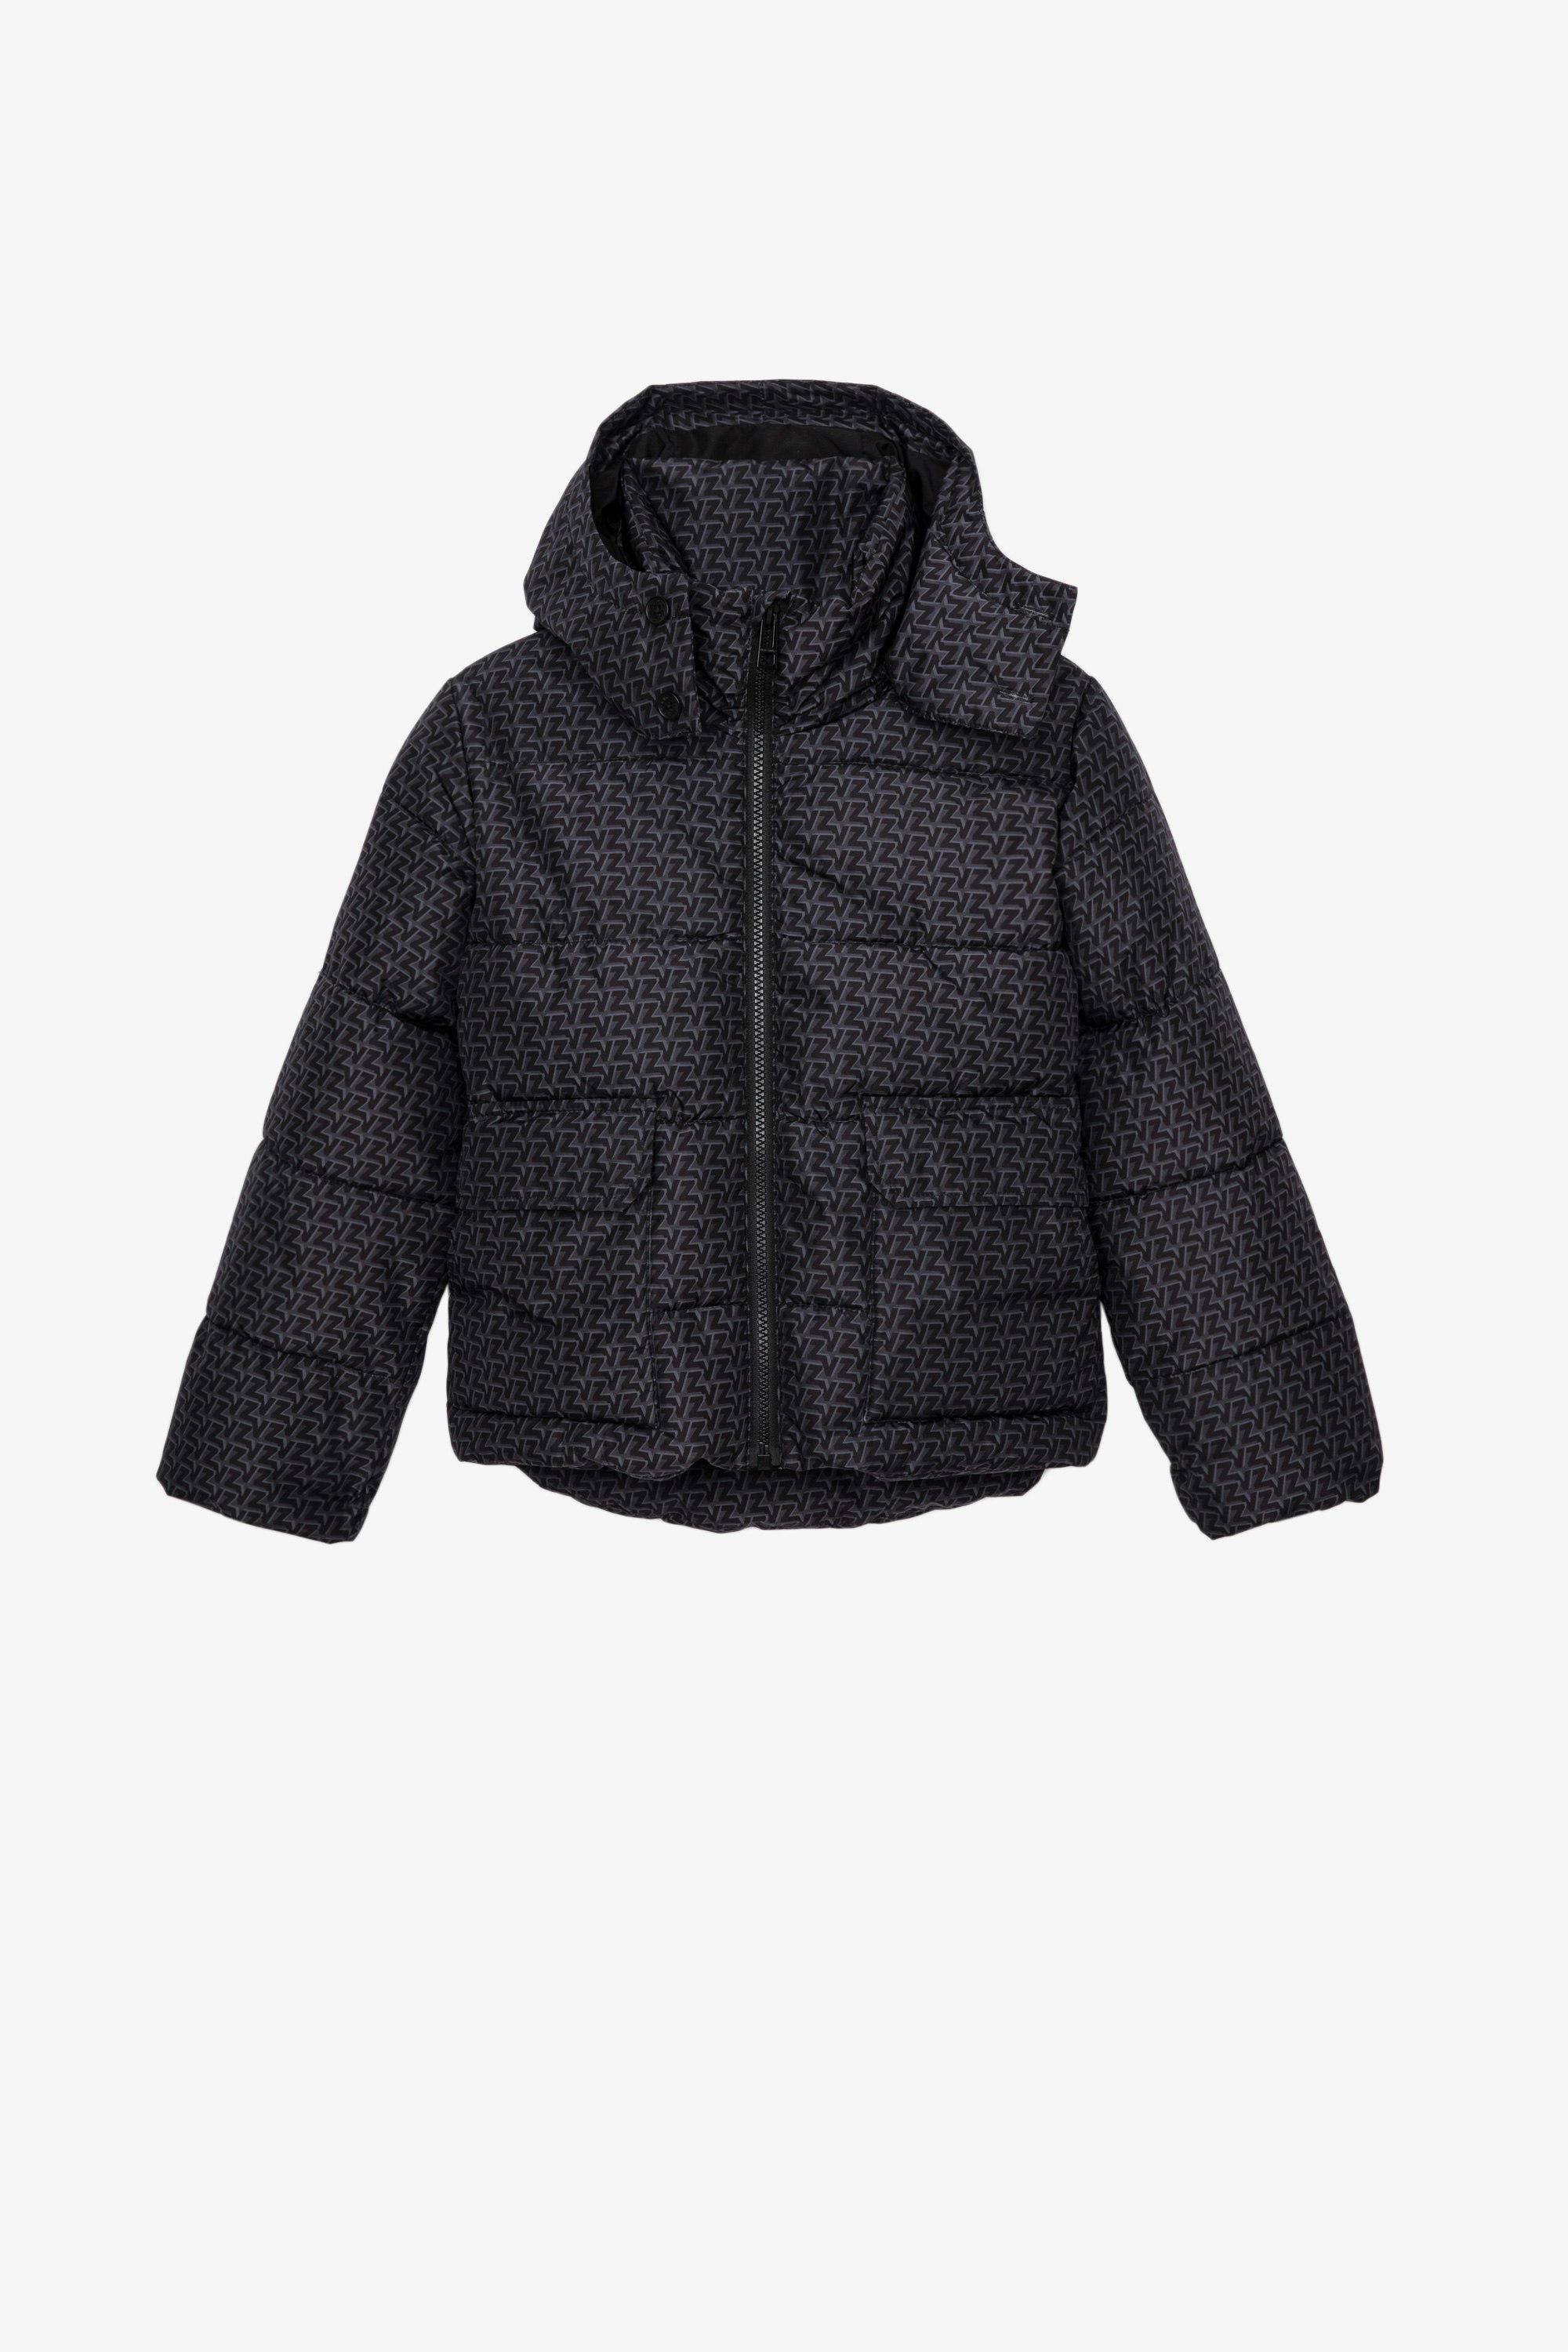 June Children’s Puffer Jacket Children’s black puffer jacket with removable hood 